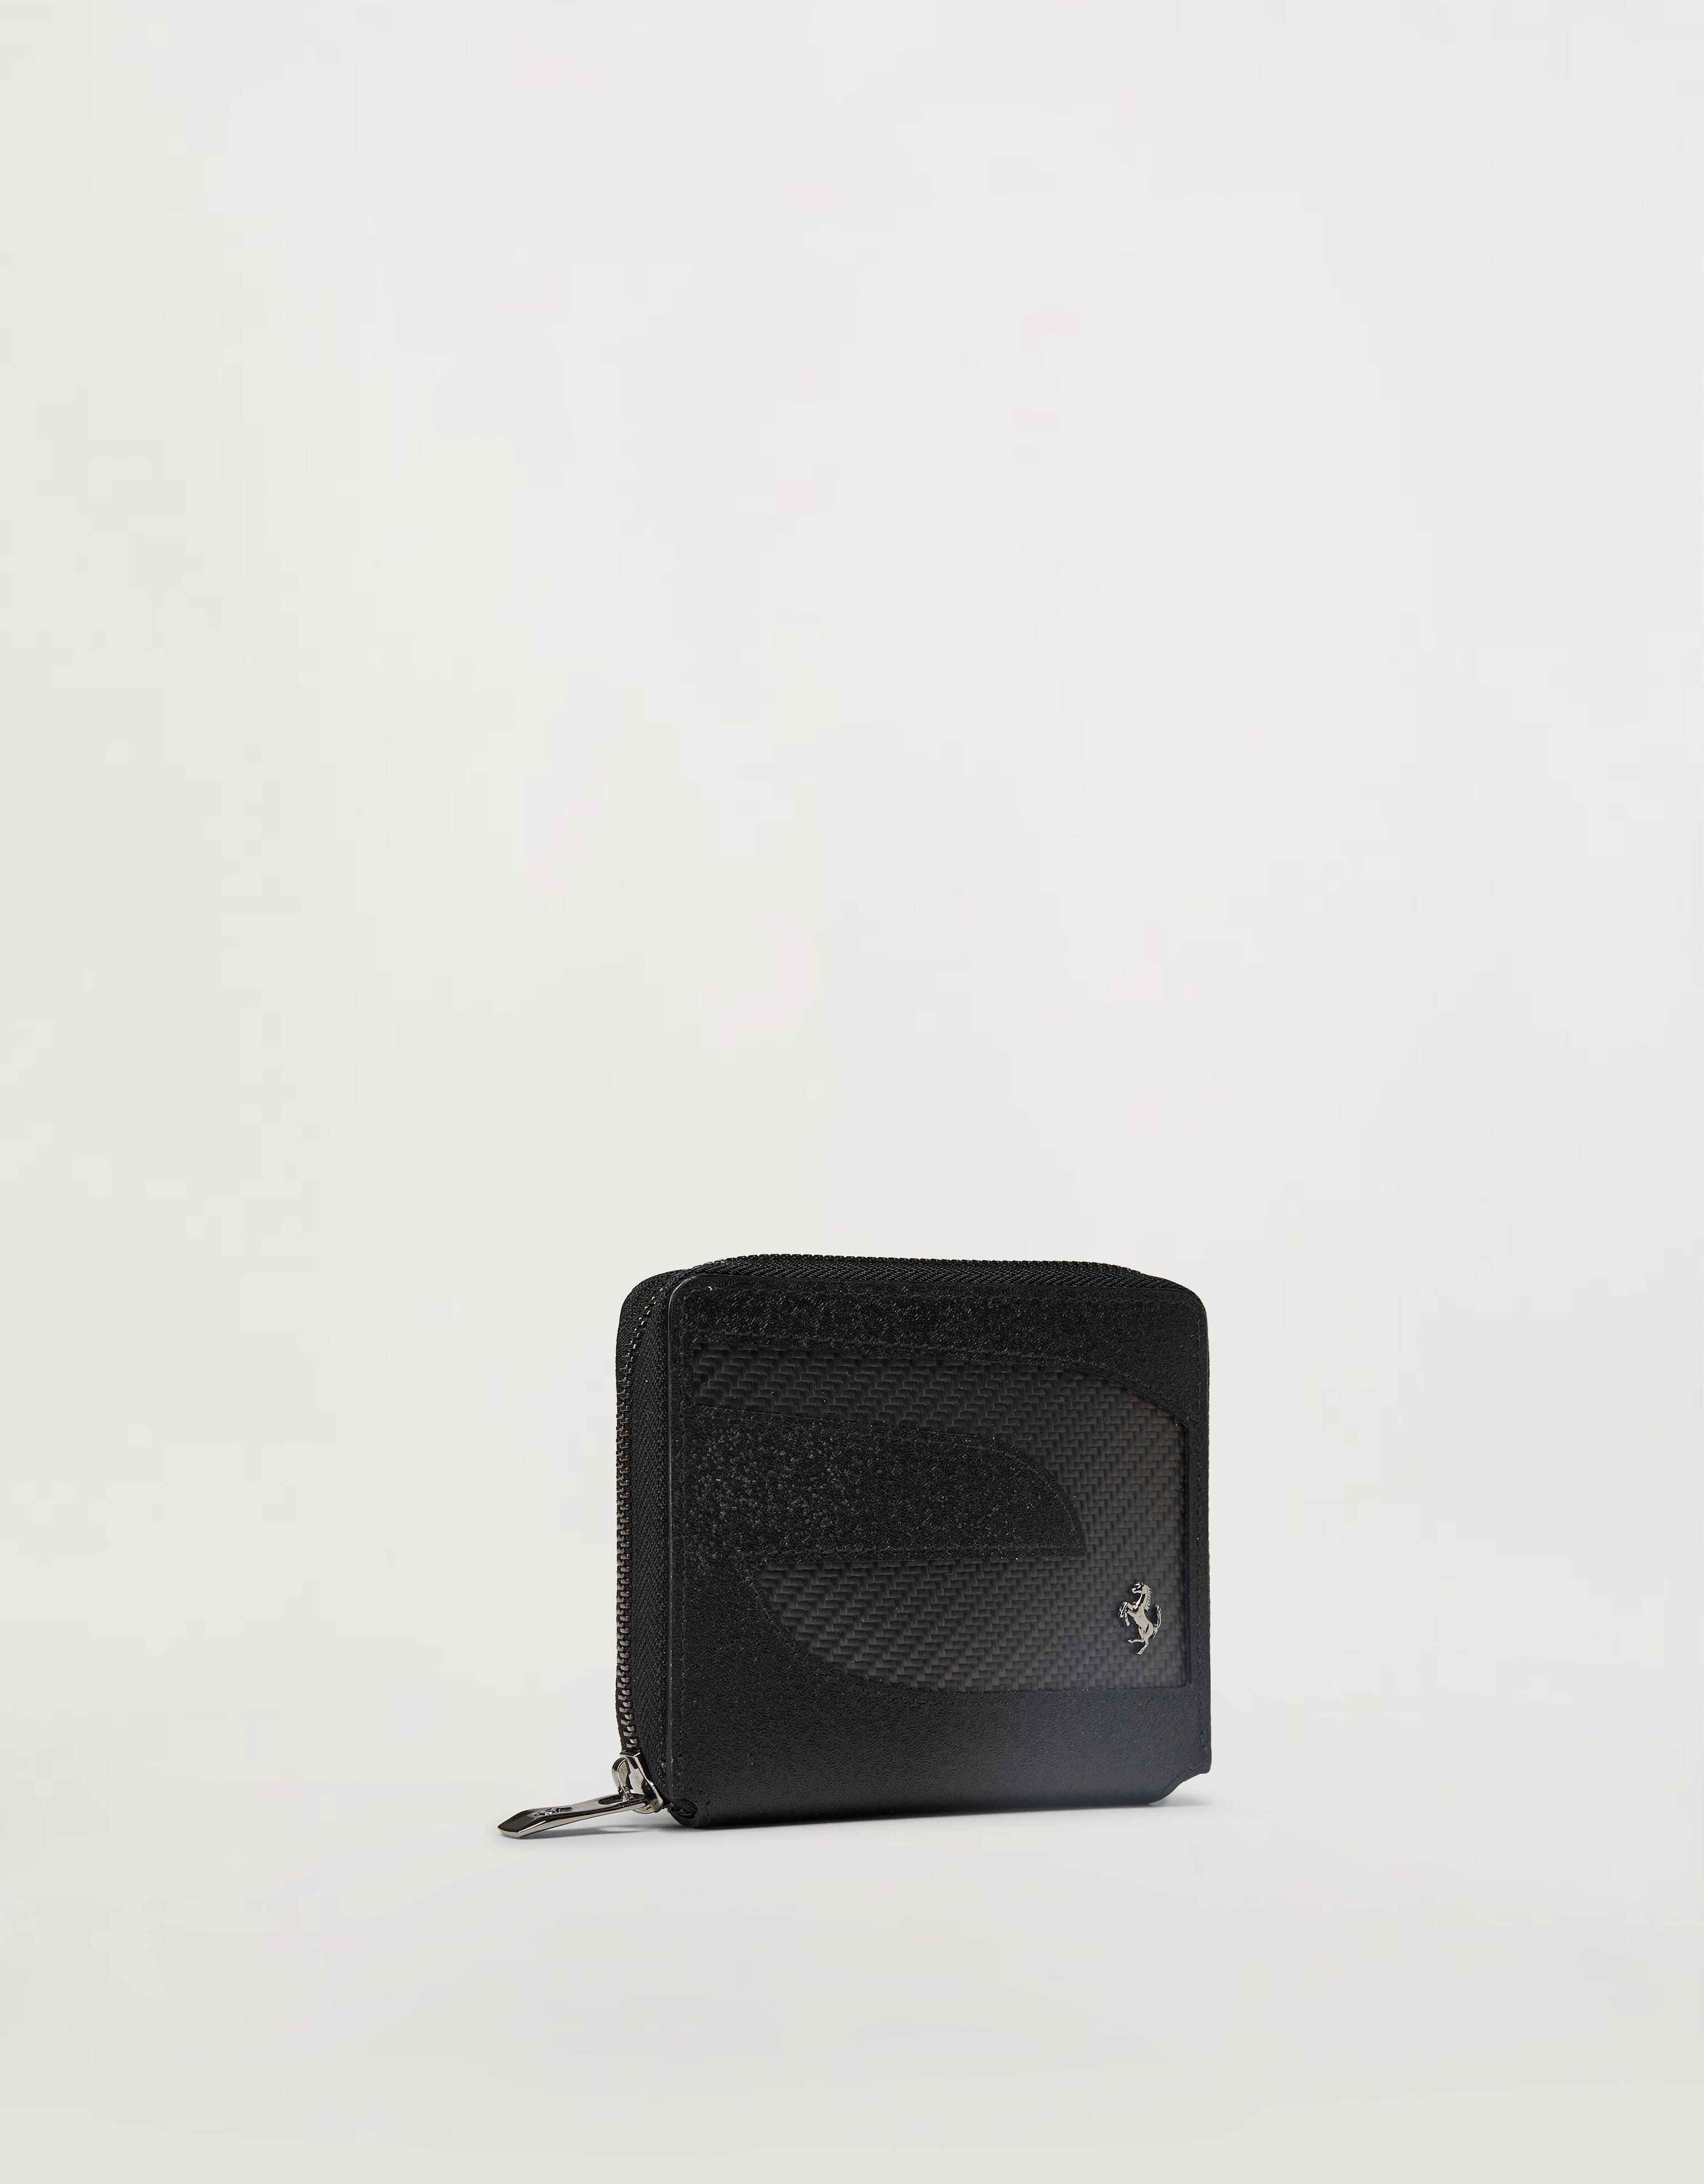 Ferrari Square leather wallet with carbon fibre insert Black 47142f